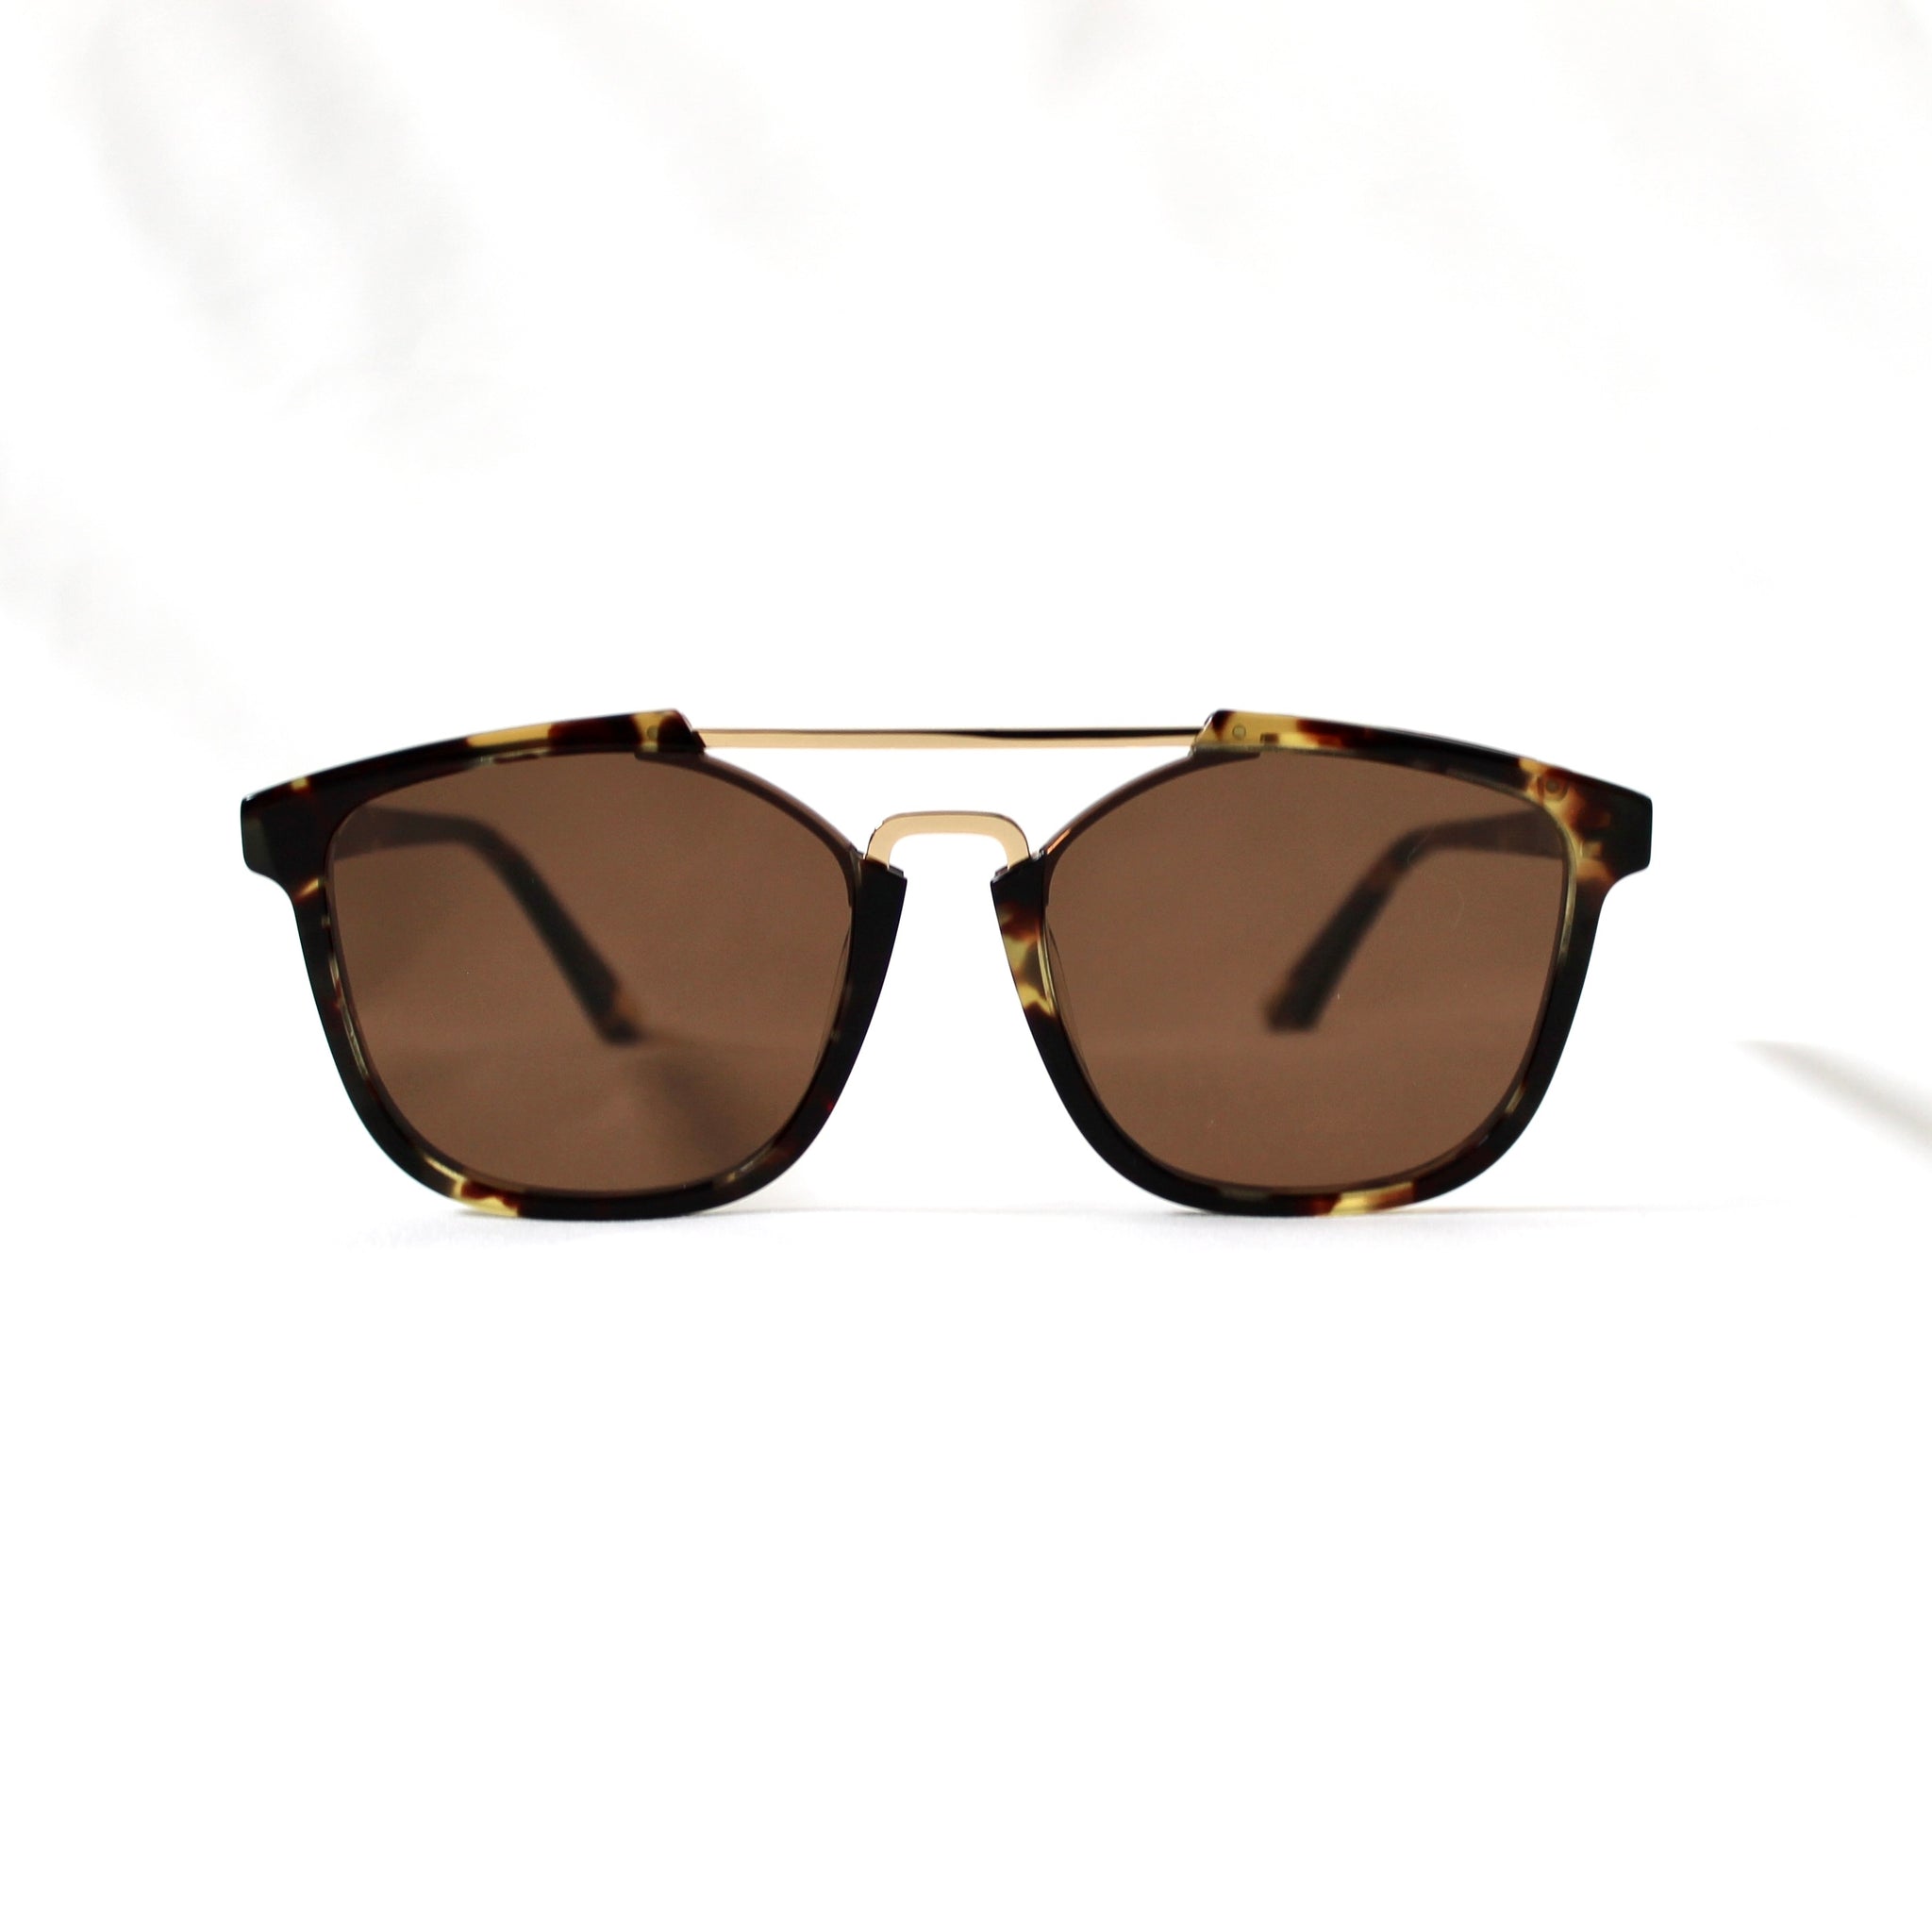 Lucala Sunglasses Tortoise and Gold